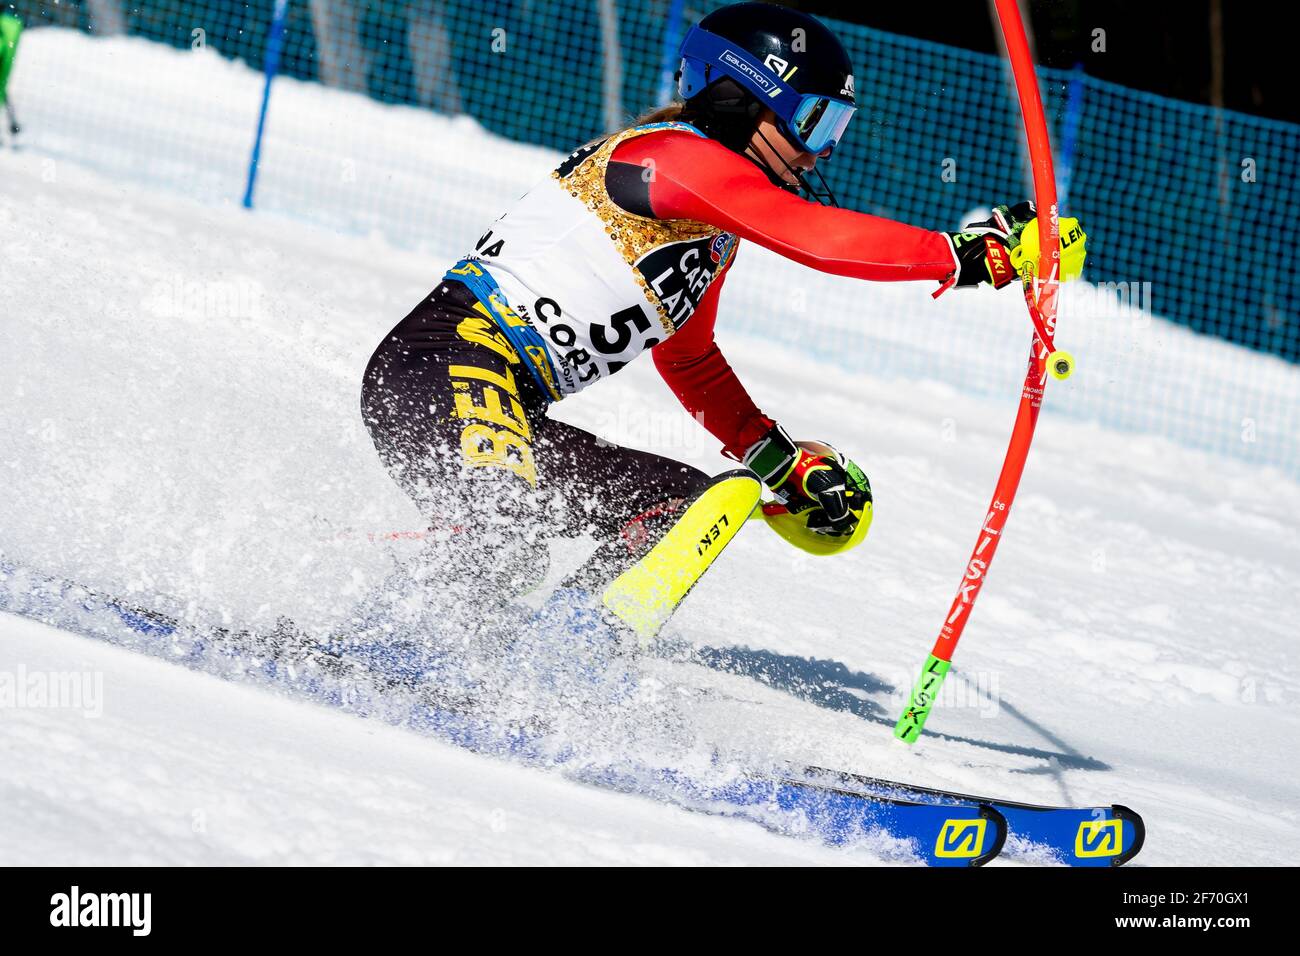 Cortina d'Ampezzo, Italy 20 February 2021:  VANREUSEL Kim (BEL) competing in the TELEPASS FIS ALPINE WORLD SKI CHAMPIONSHIPS 2021 Women's Slalom on th Stock Photo